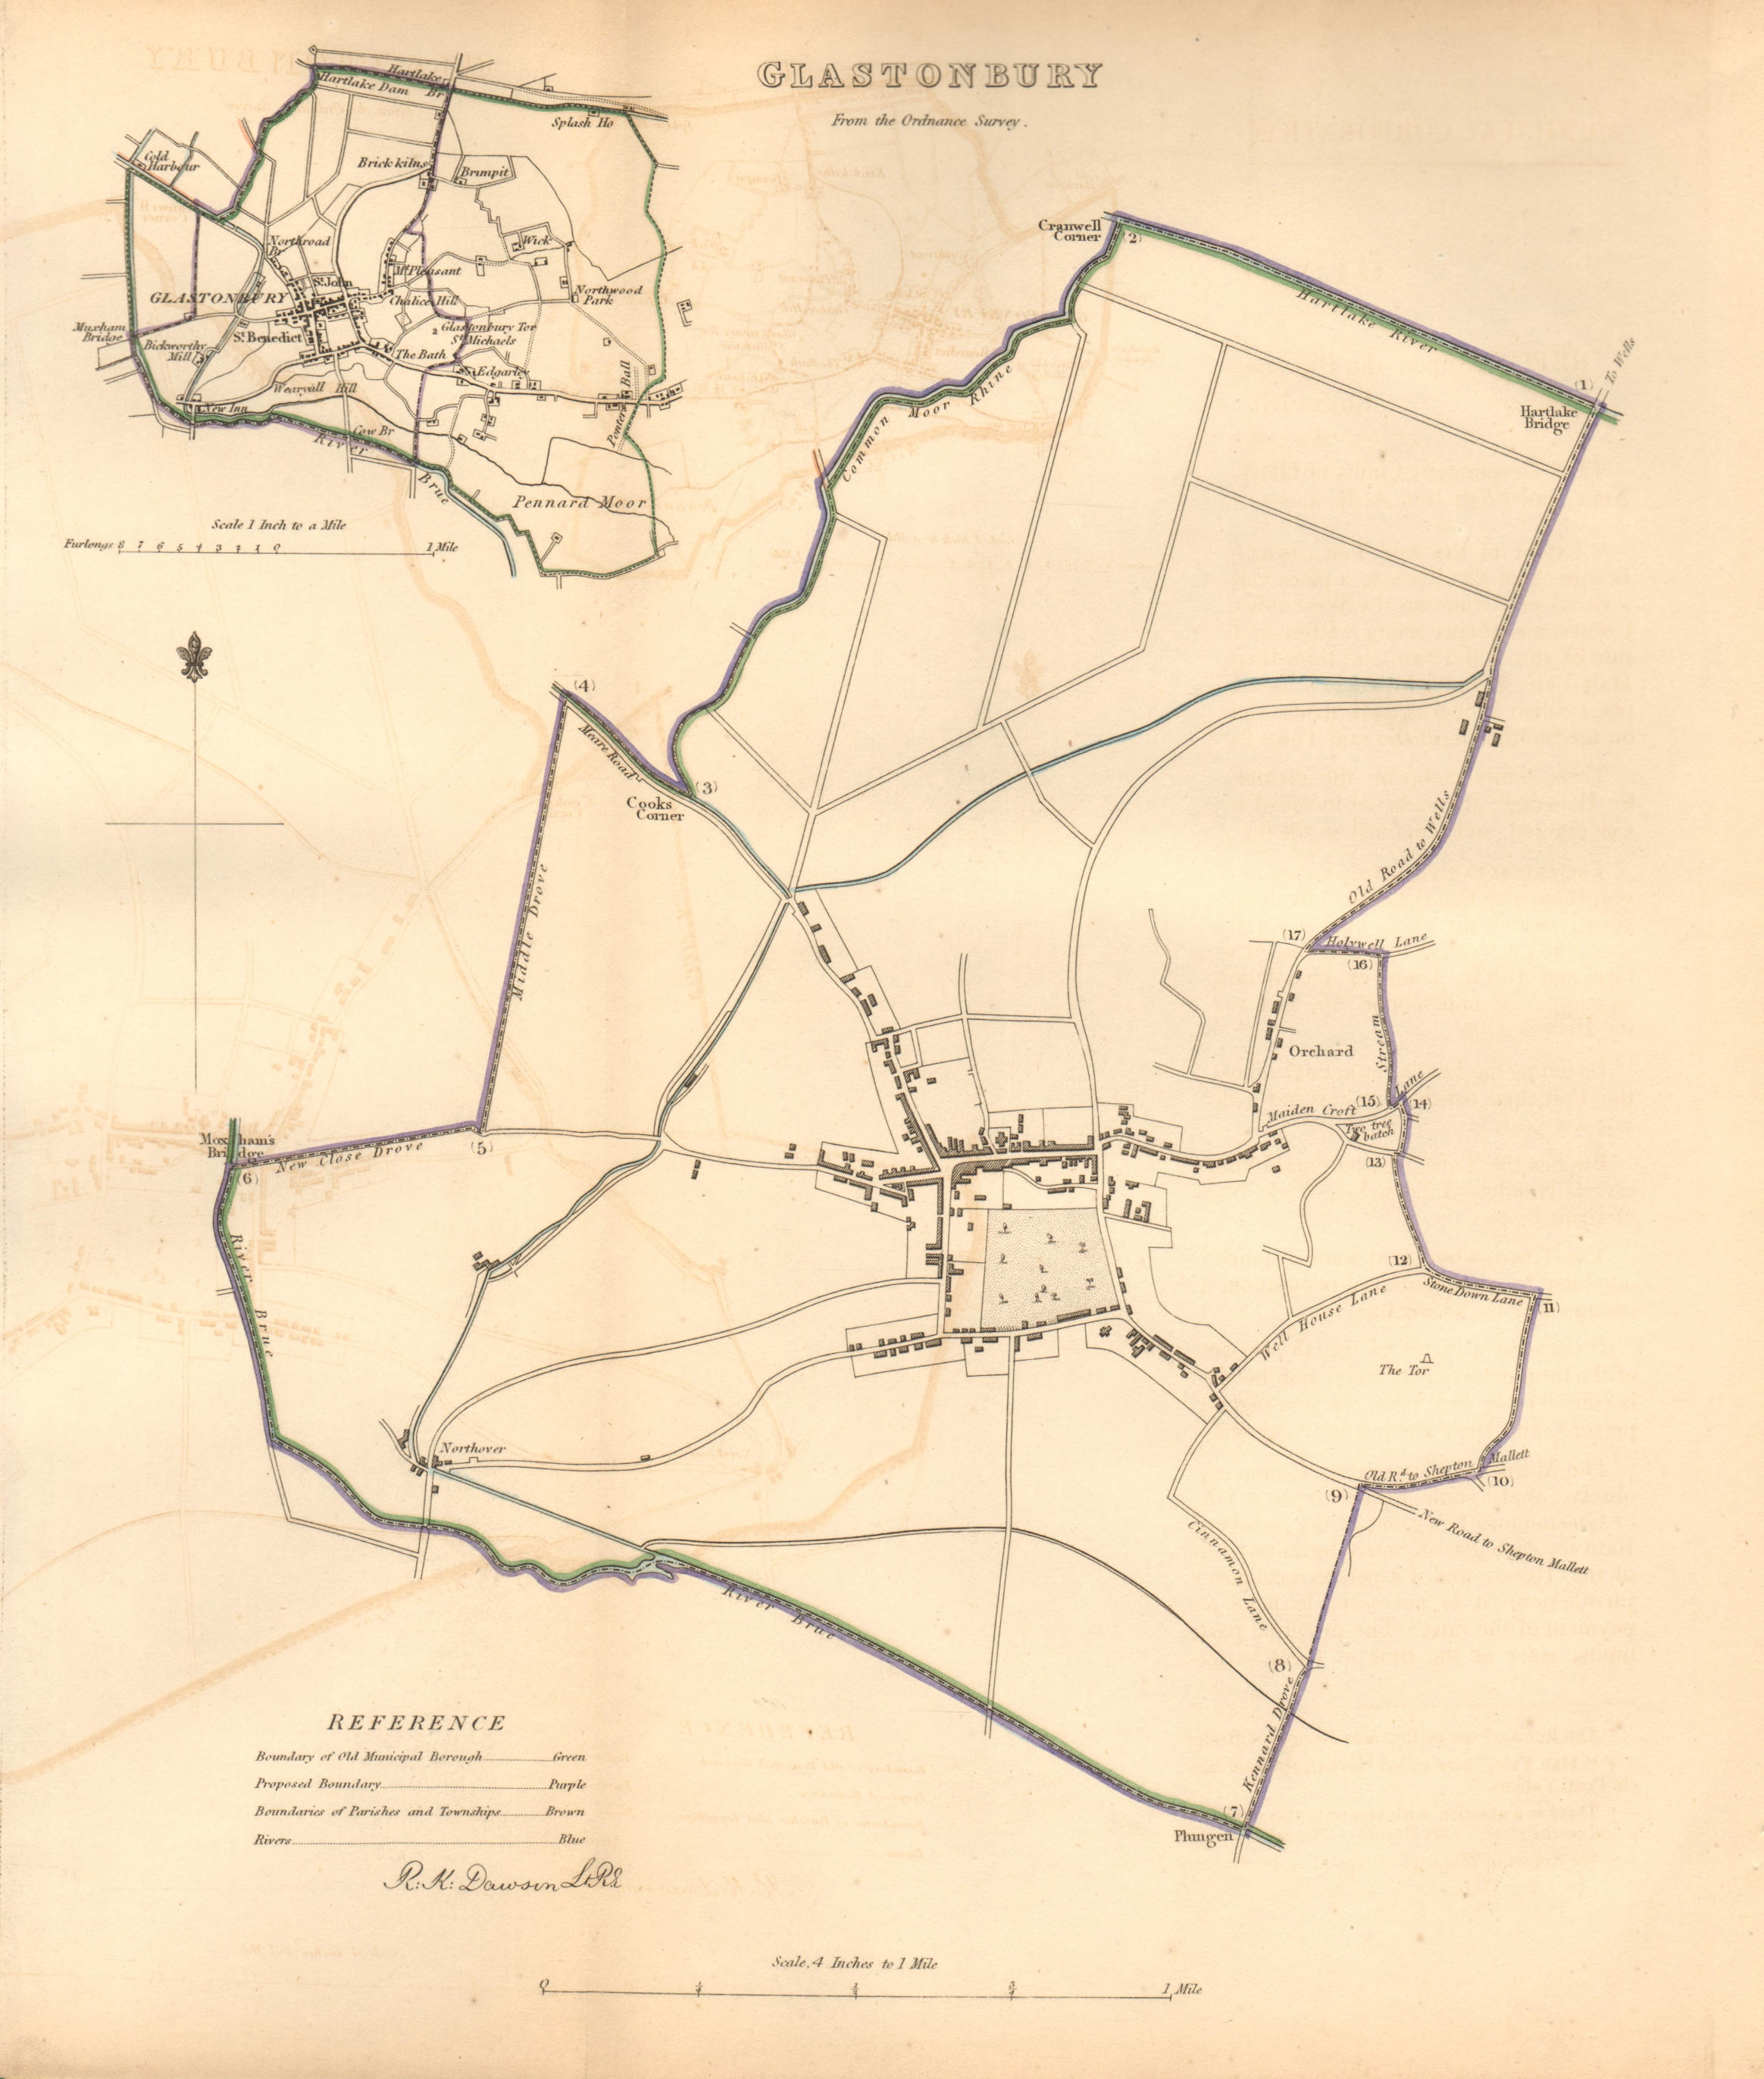 GLASTONBURY borough/town plan. BOUNDARY COMMISSION. Somerset. DAWSON 1837 map